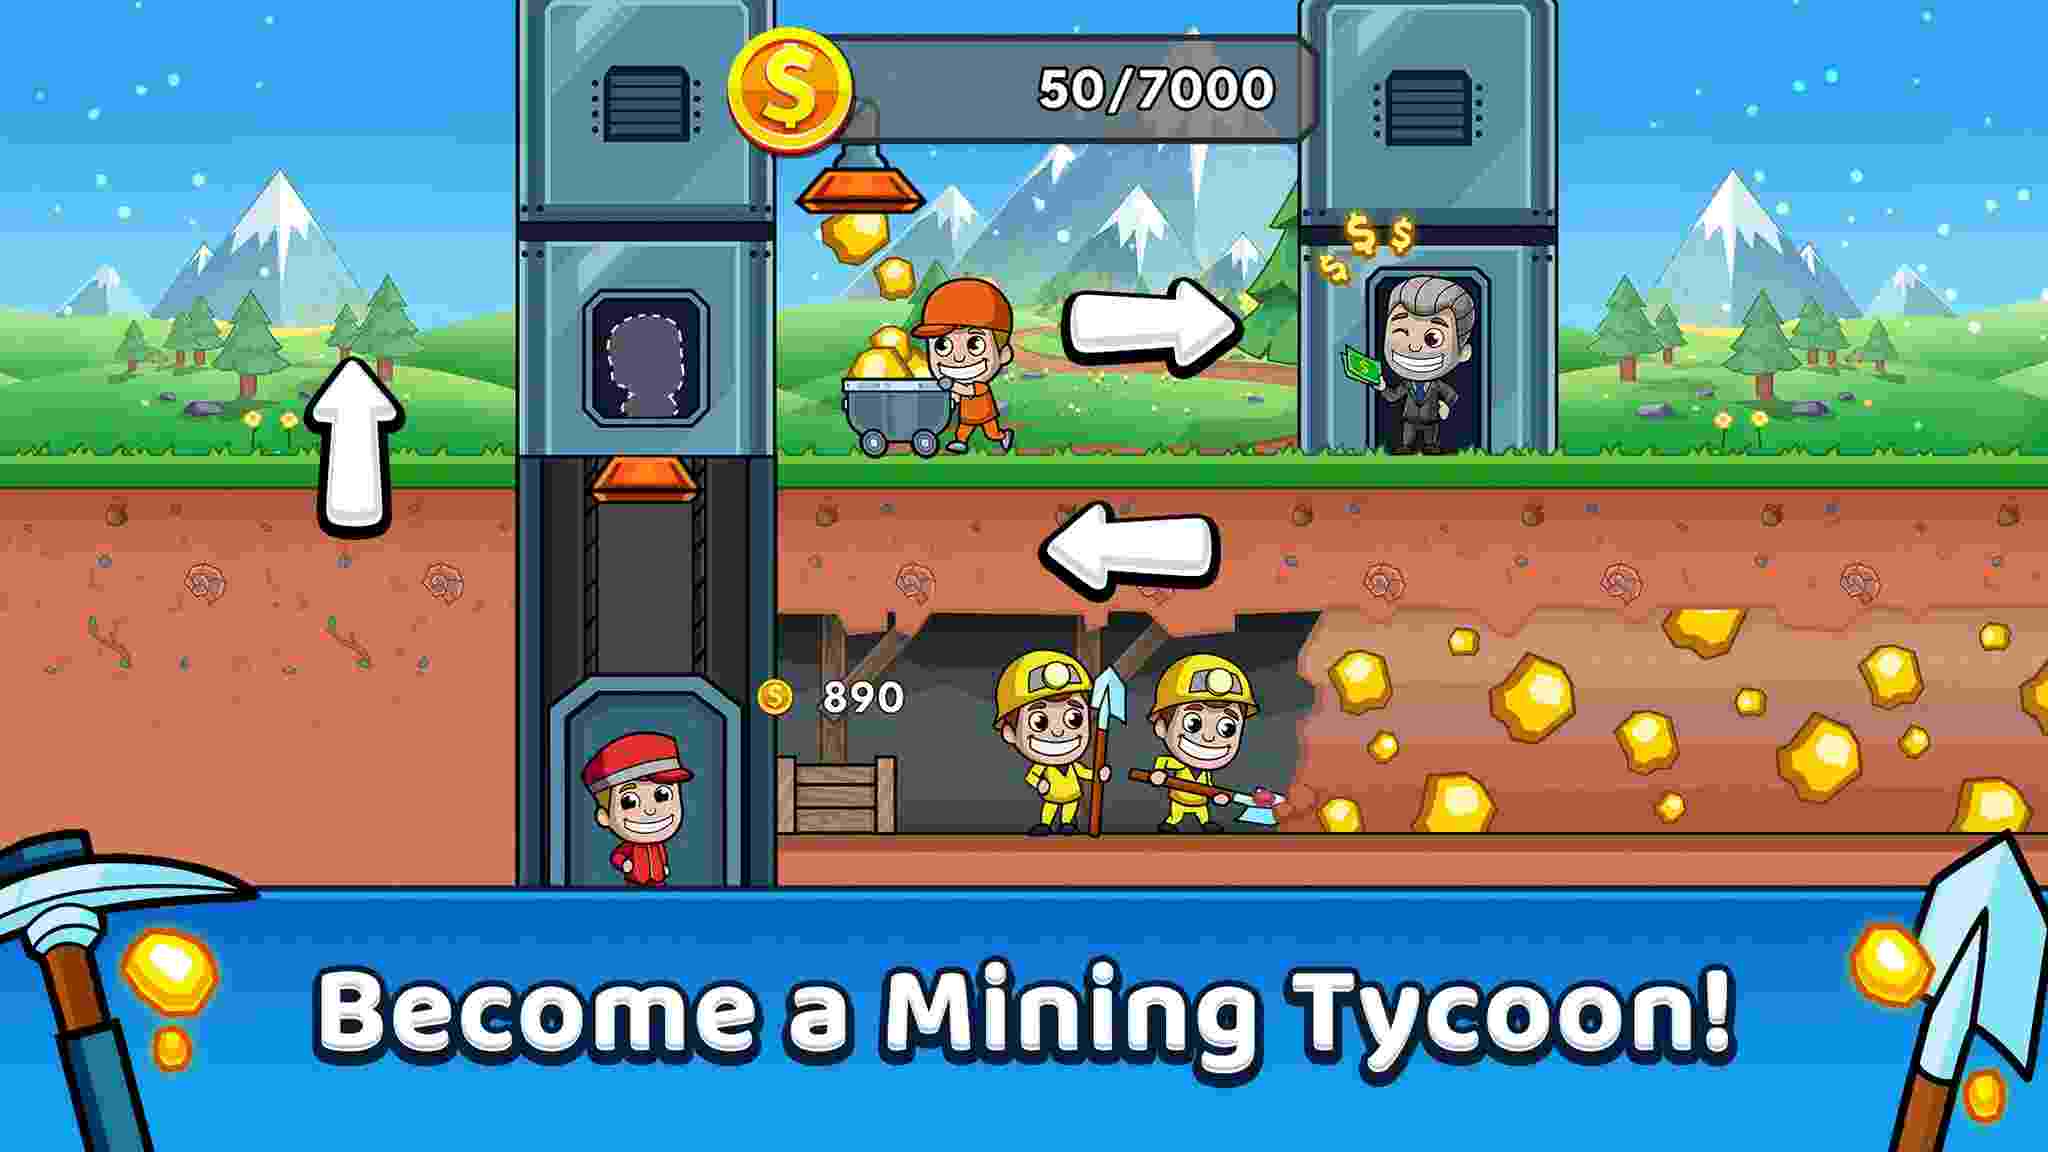 Idle Miner Tycoon Mod